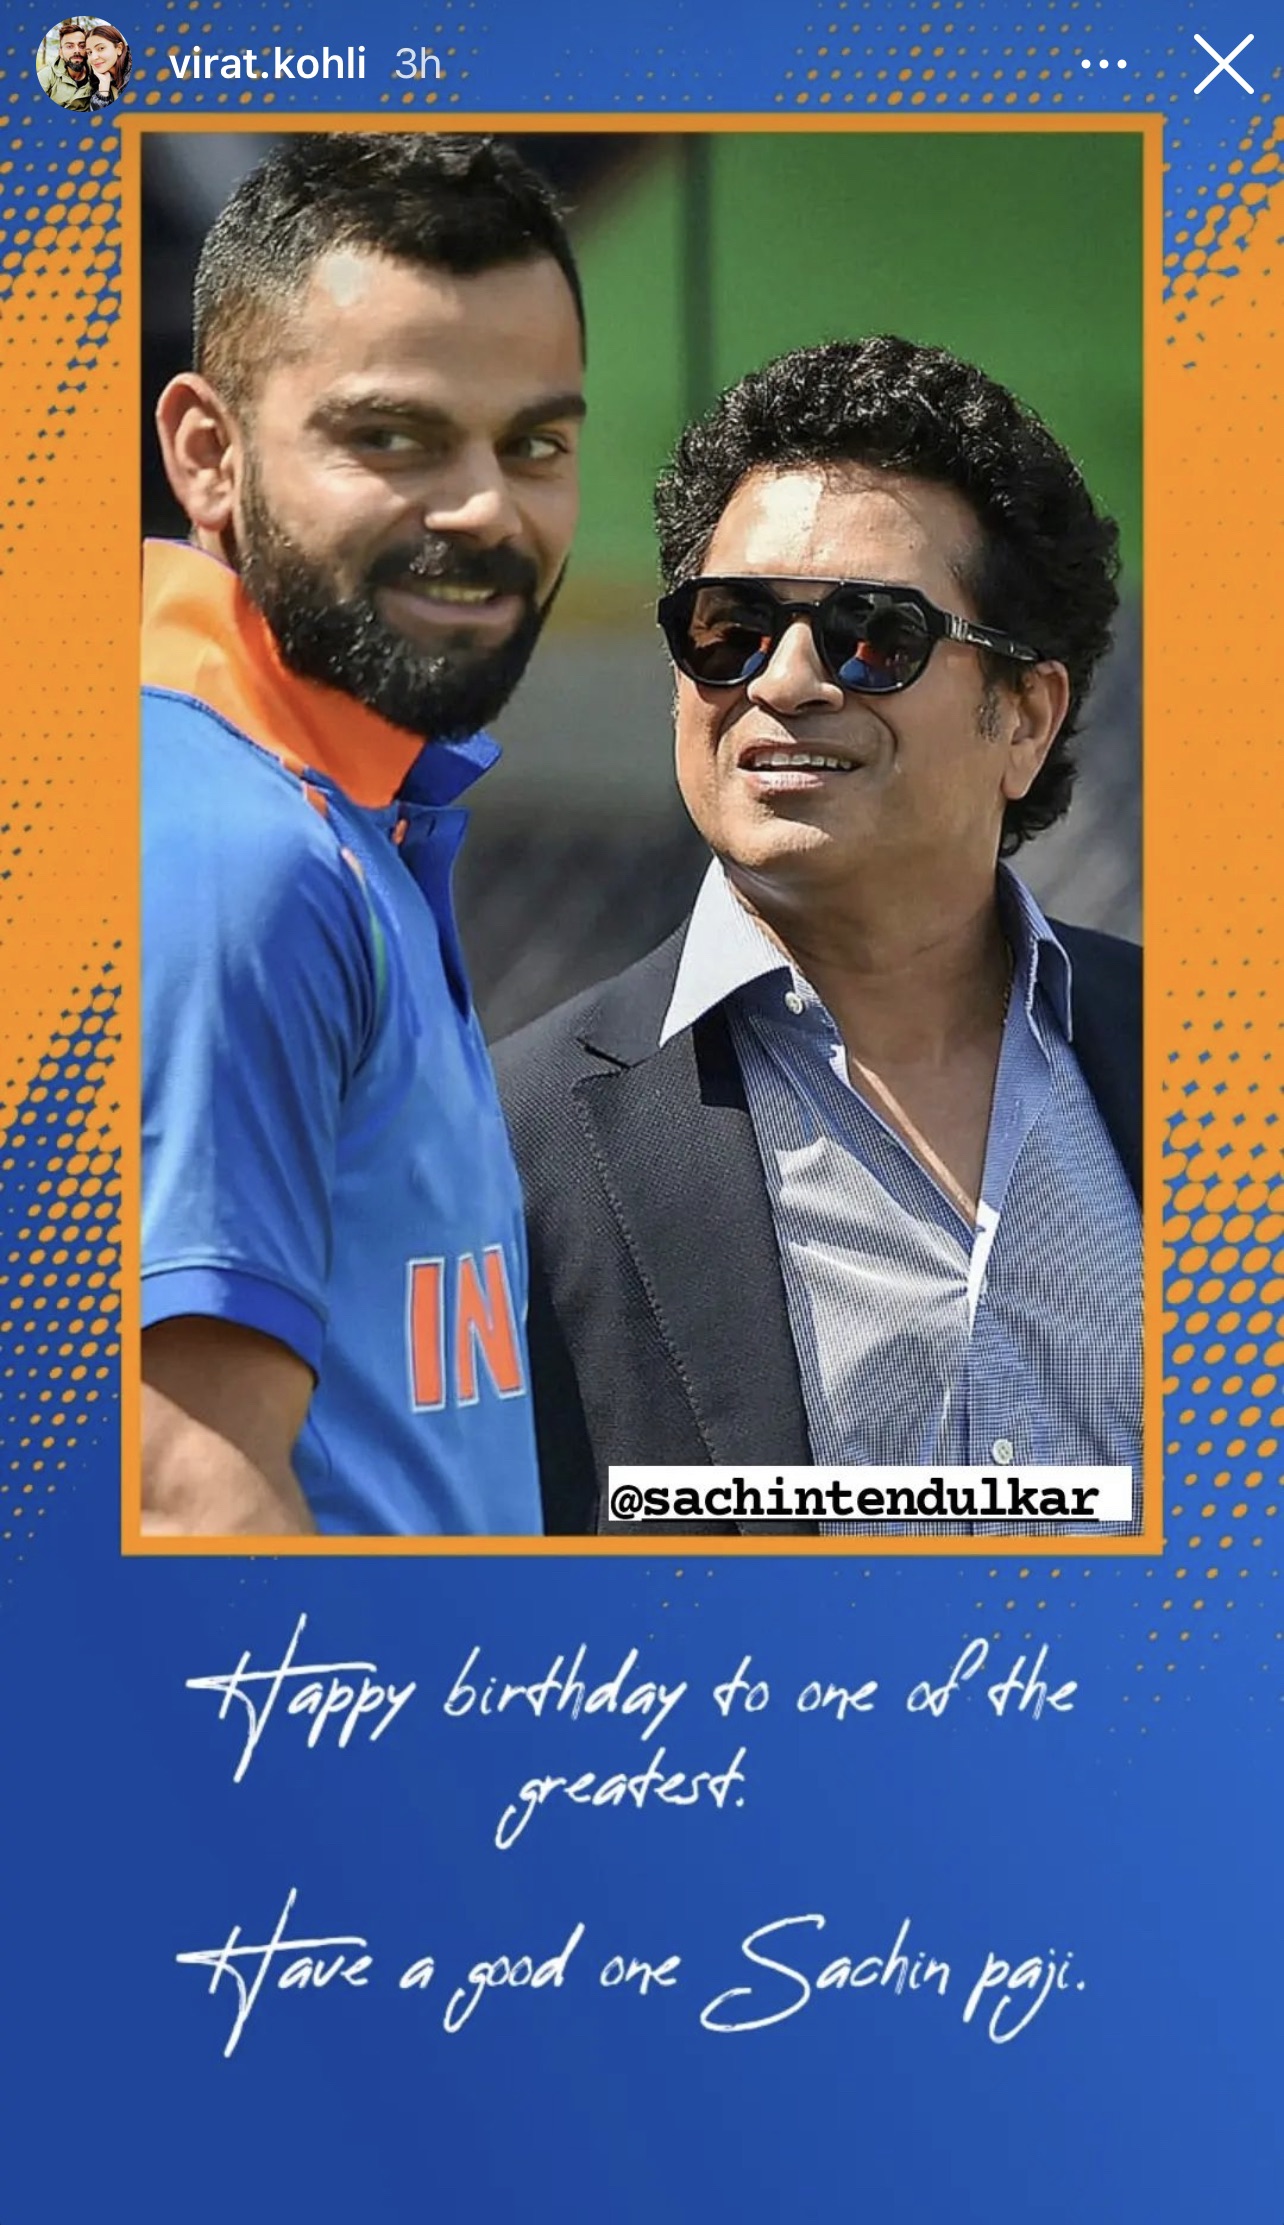 Virat Kohli's birthday wish to Sachin Tendulkar